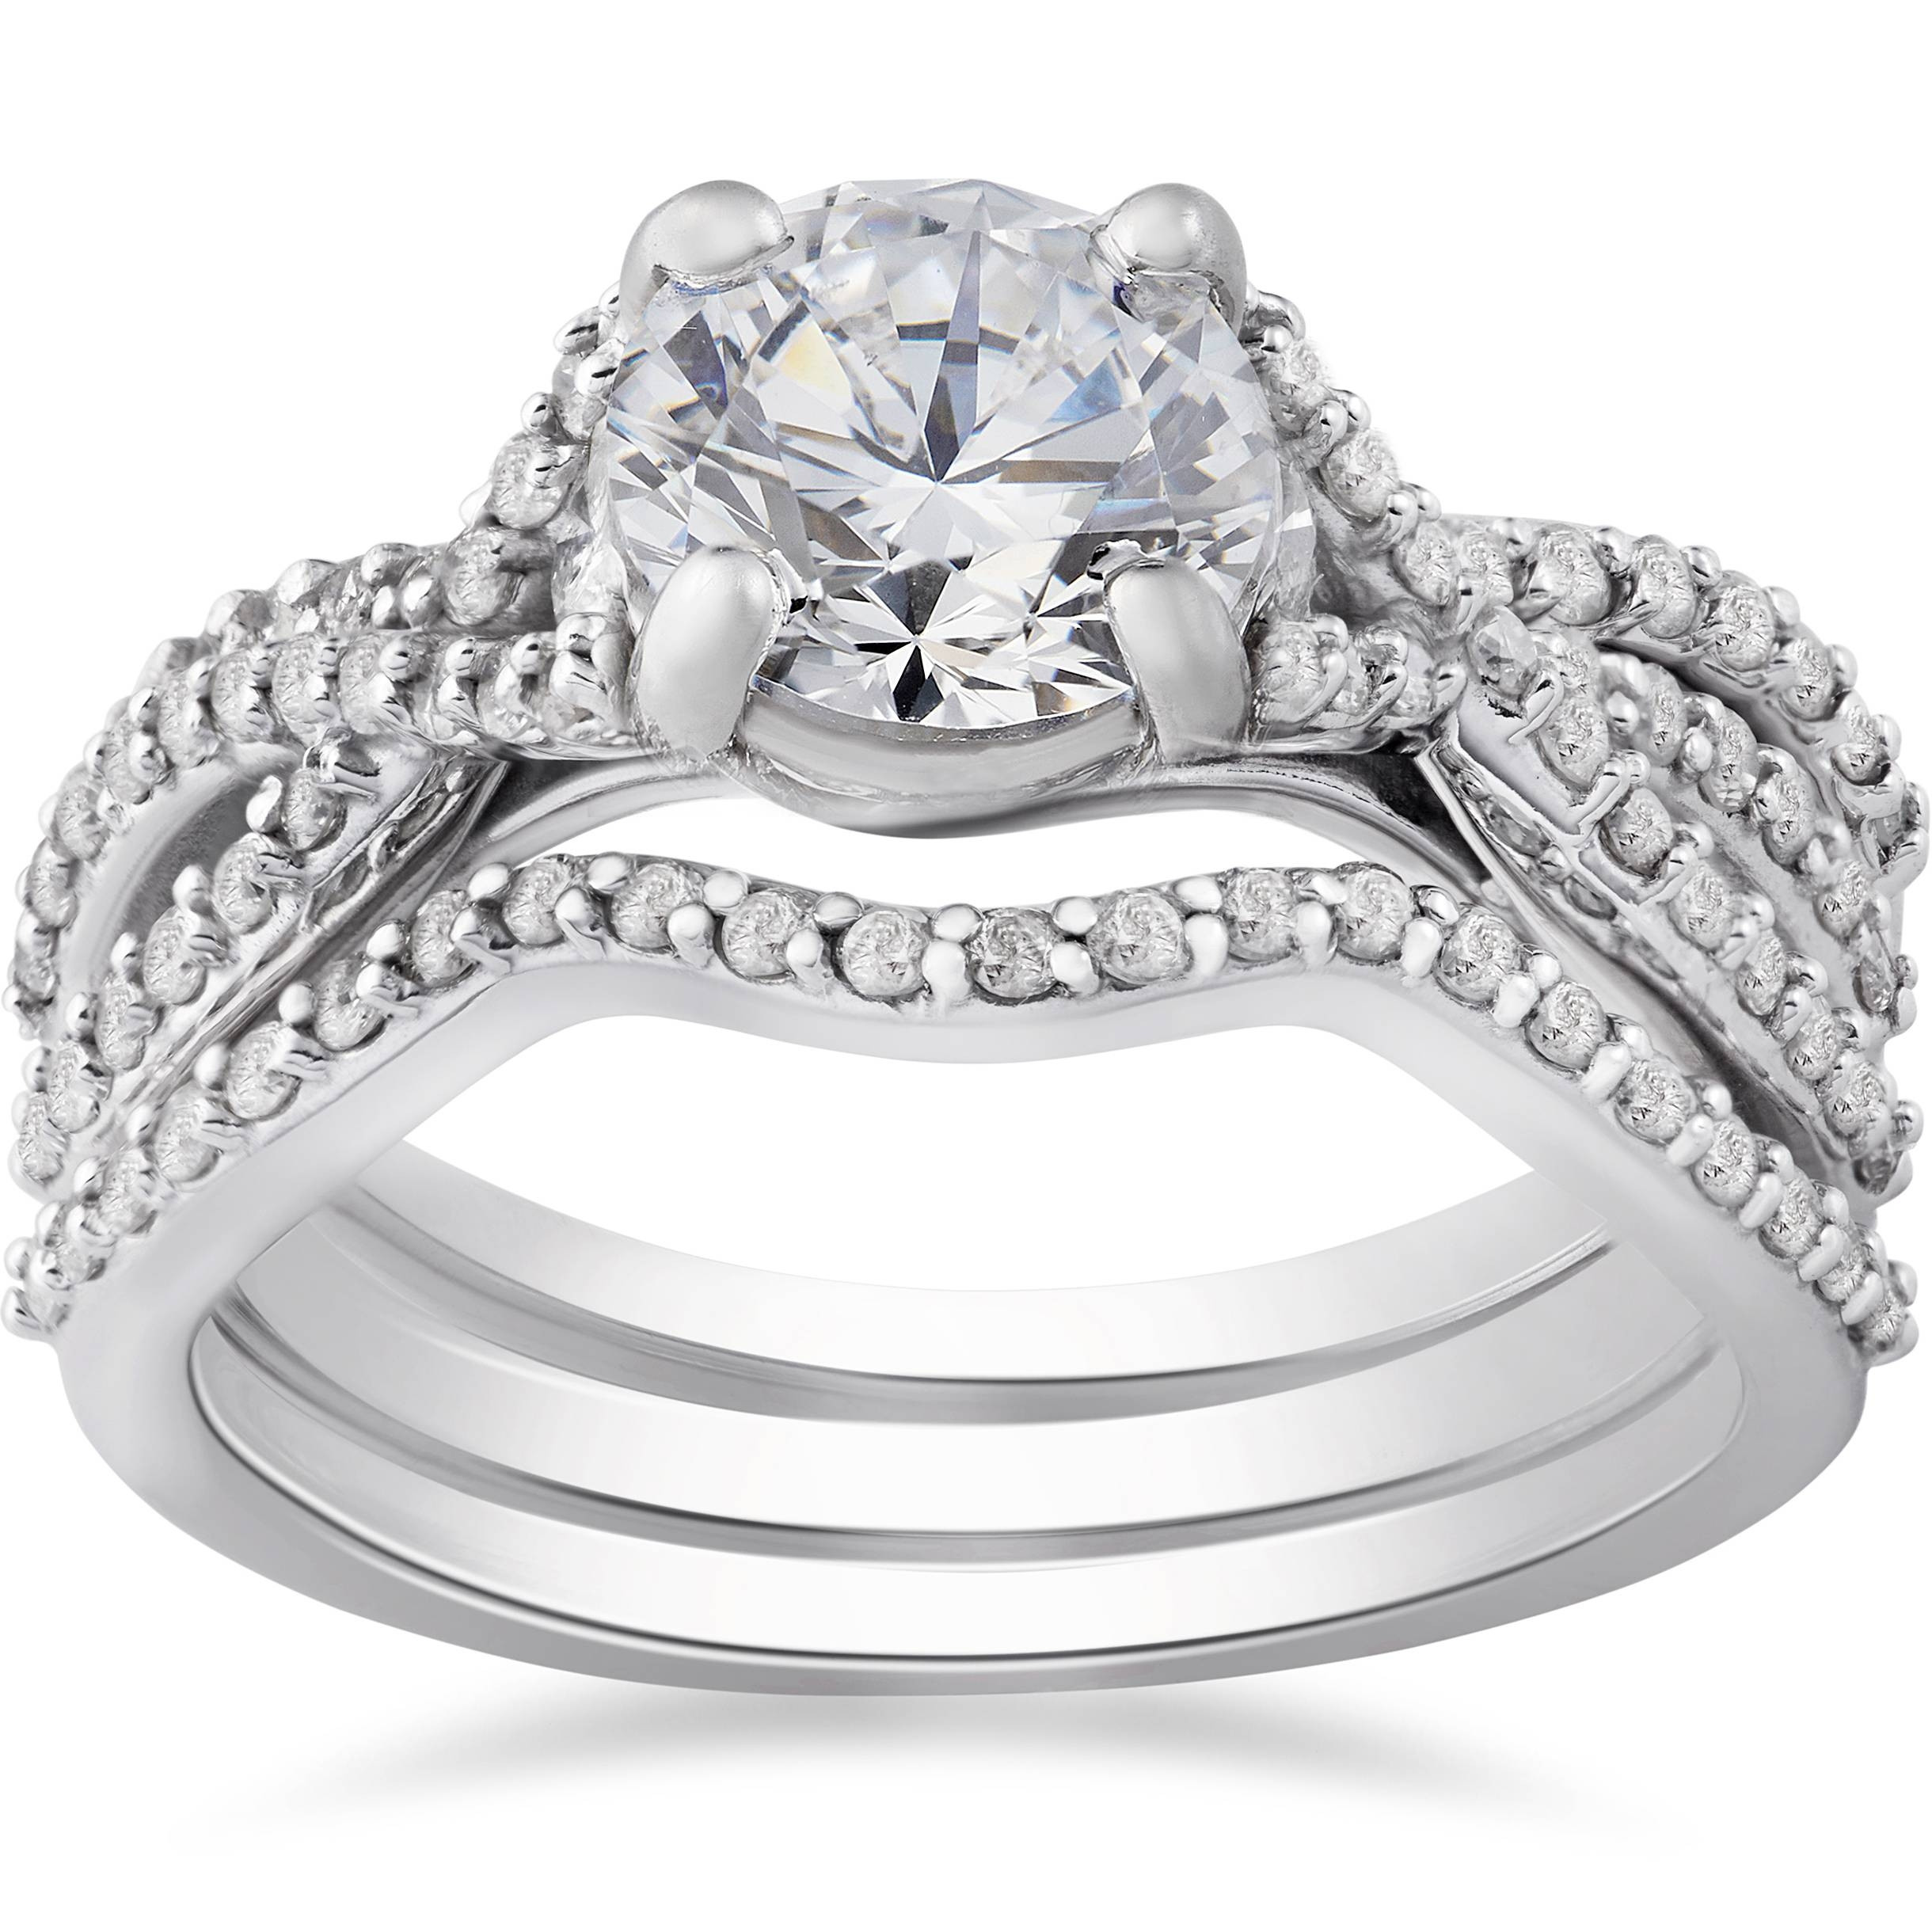 Walmart Diamond Wedding Rings
 51 Walmart Wedding Ring Sets Walmart Wedding Ring Sets